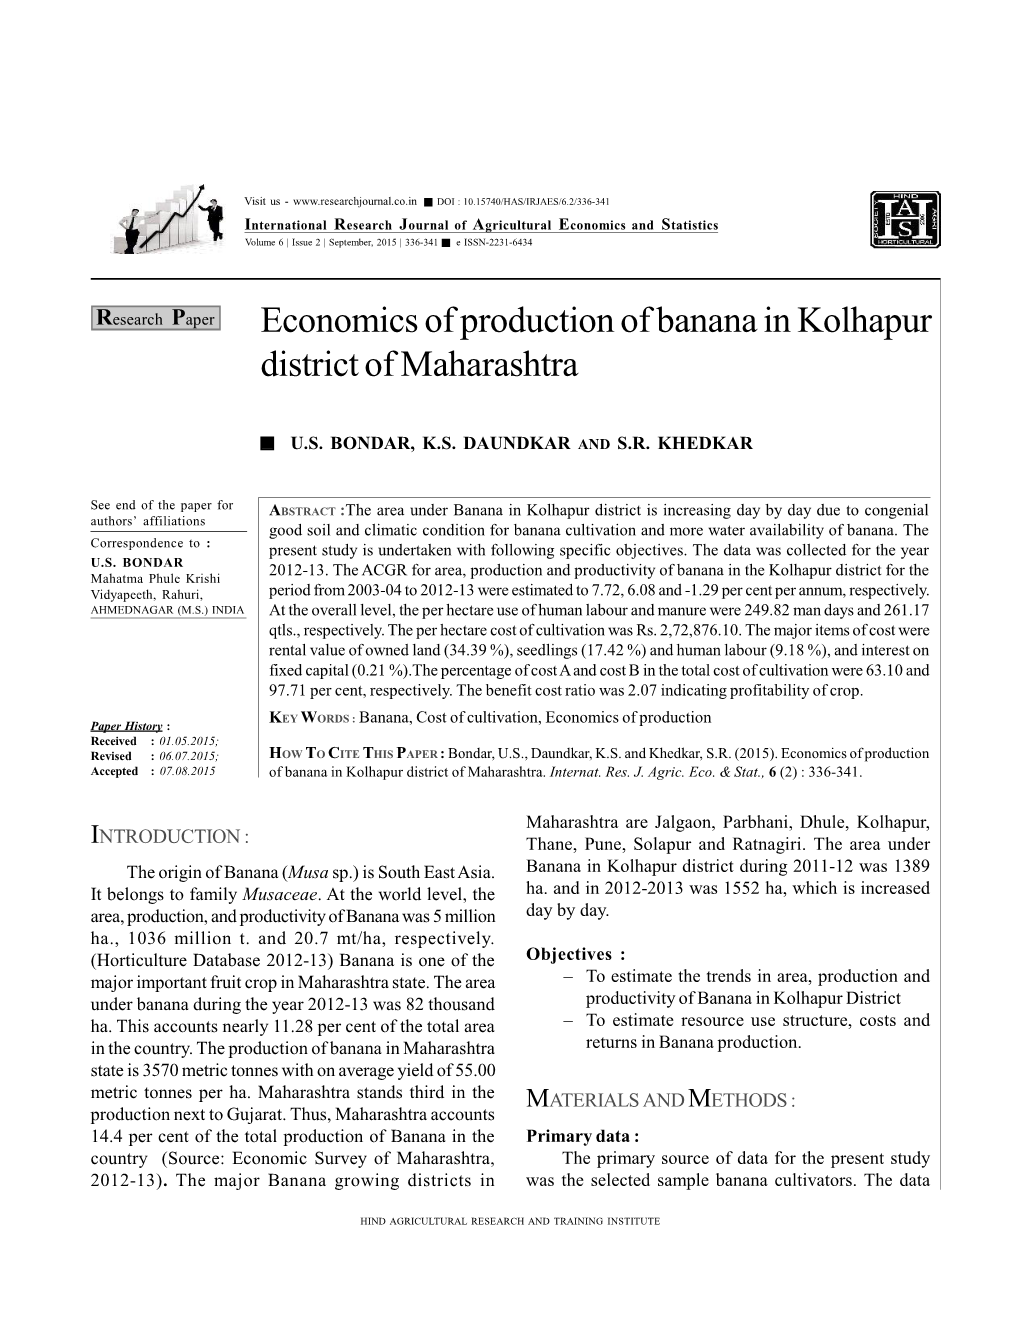 Economics of Production of Banana in Kolhapur District of Maharashtra